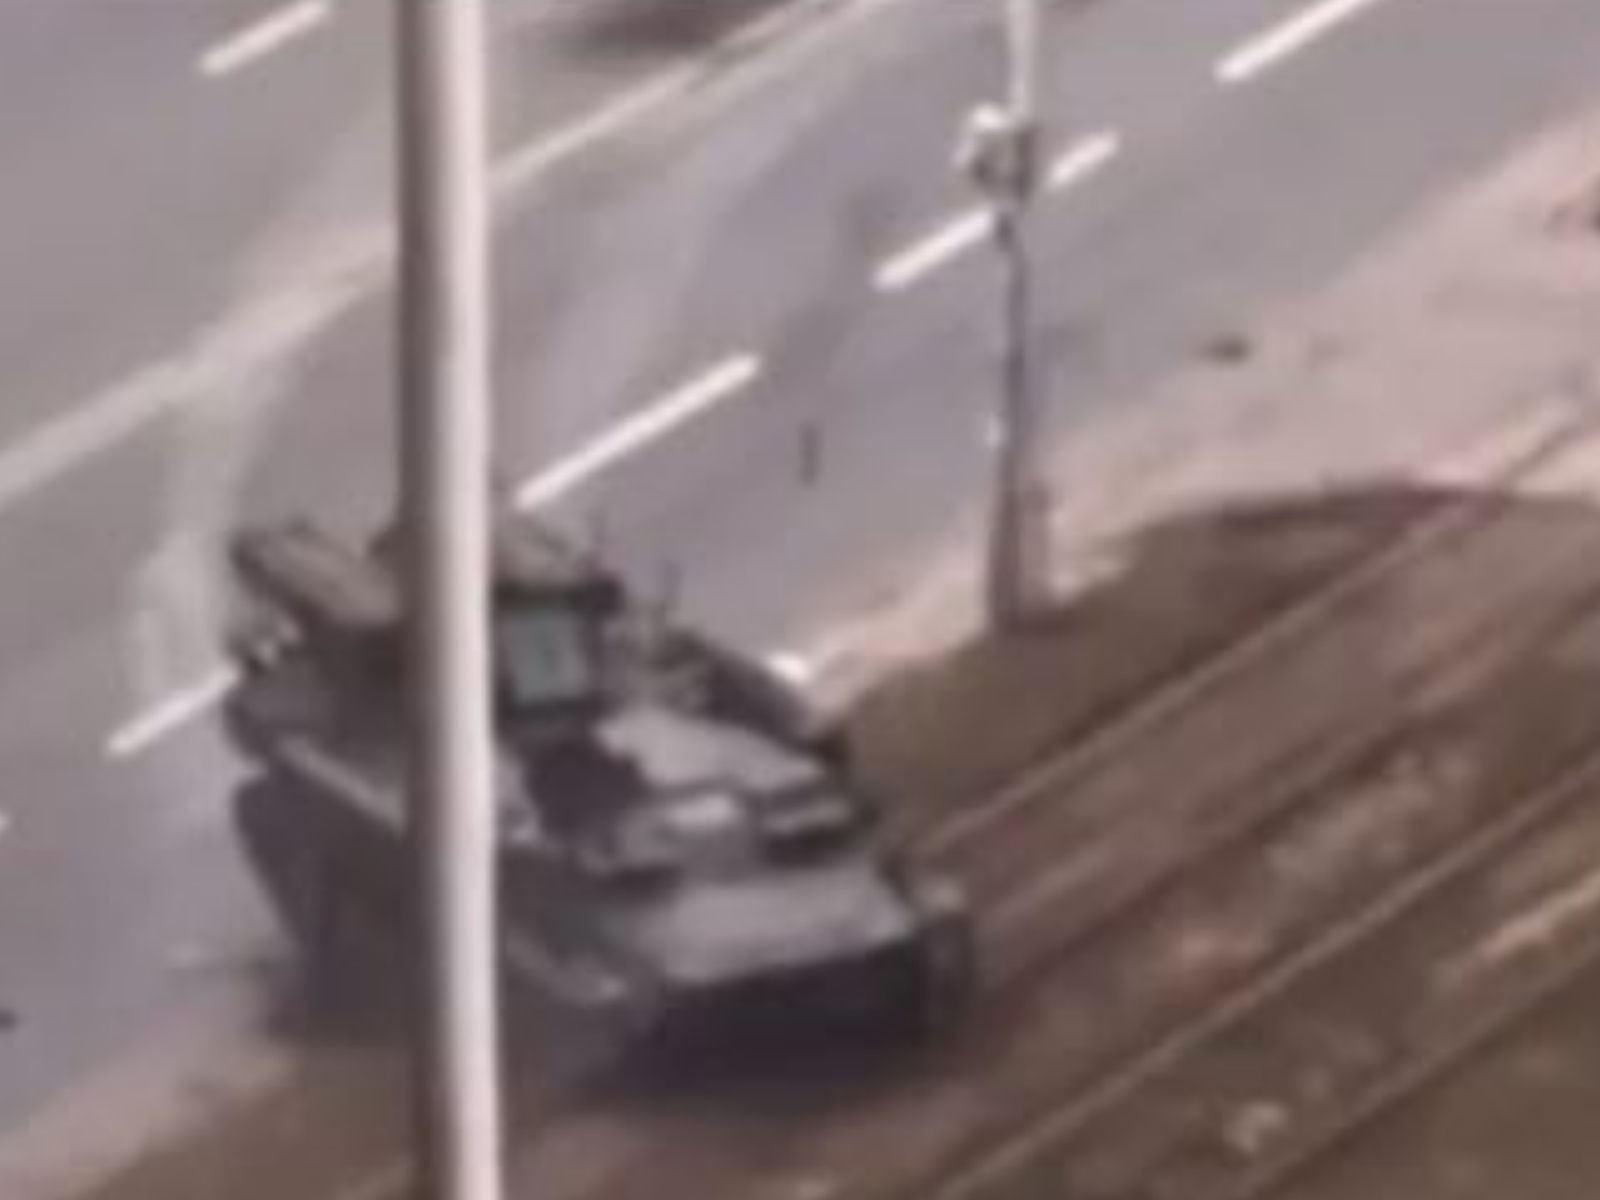 Ukraine-Russia War: ਯੂਕਰੇਨ ਦੀਆਂ ਸੜਕਾਂ 'ਤੇ ਰੂਸੀ ਟੈਂਕ ਨੇ ਦਰੜੀ ਕਾਰ, ਦੇਖੋ VIDEO